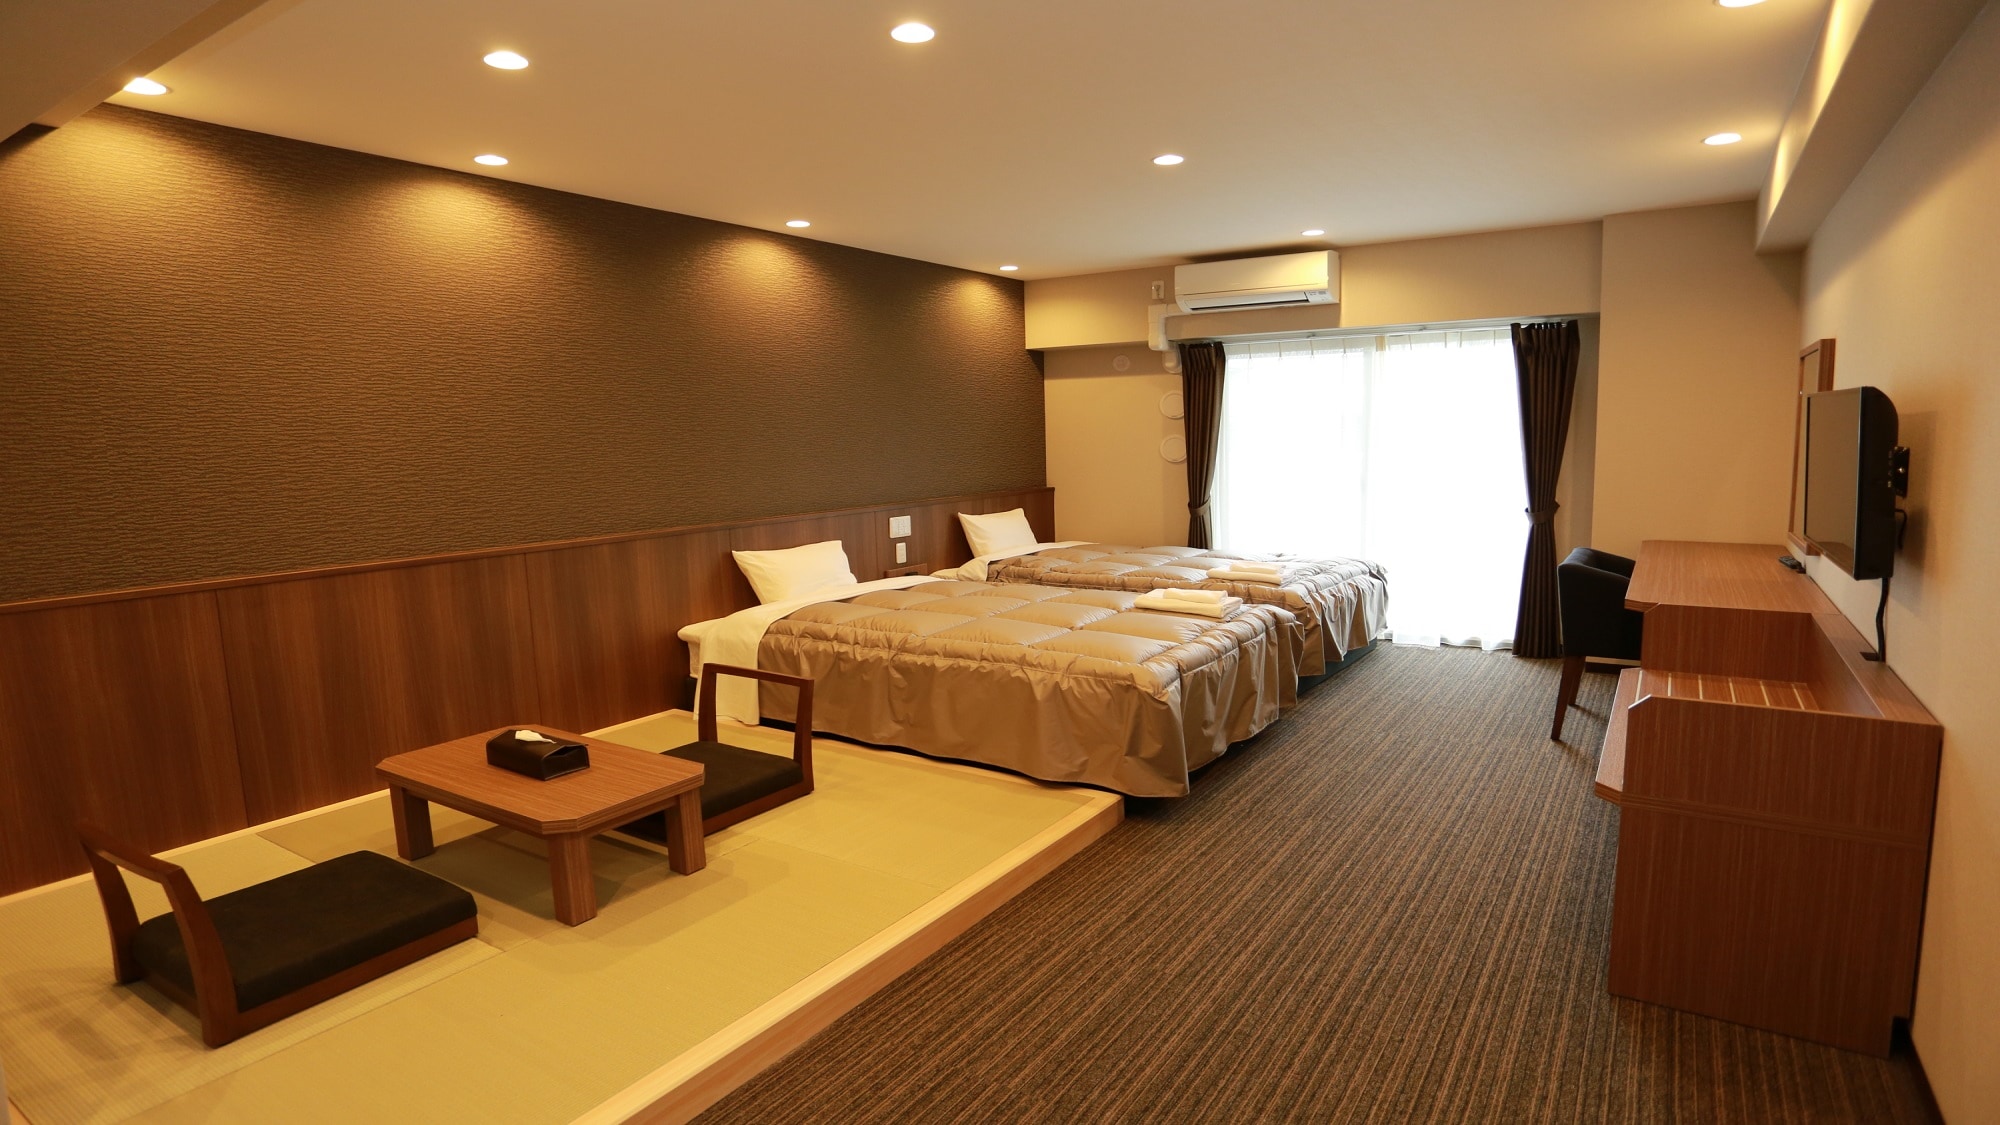 Kamar Jepang dan Barat Lebar 120 cm 2 tempat tidur + ruang tatami